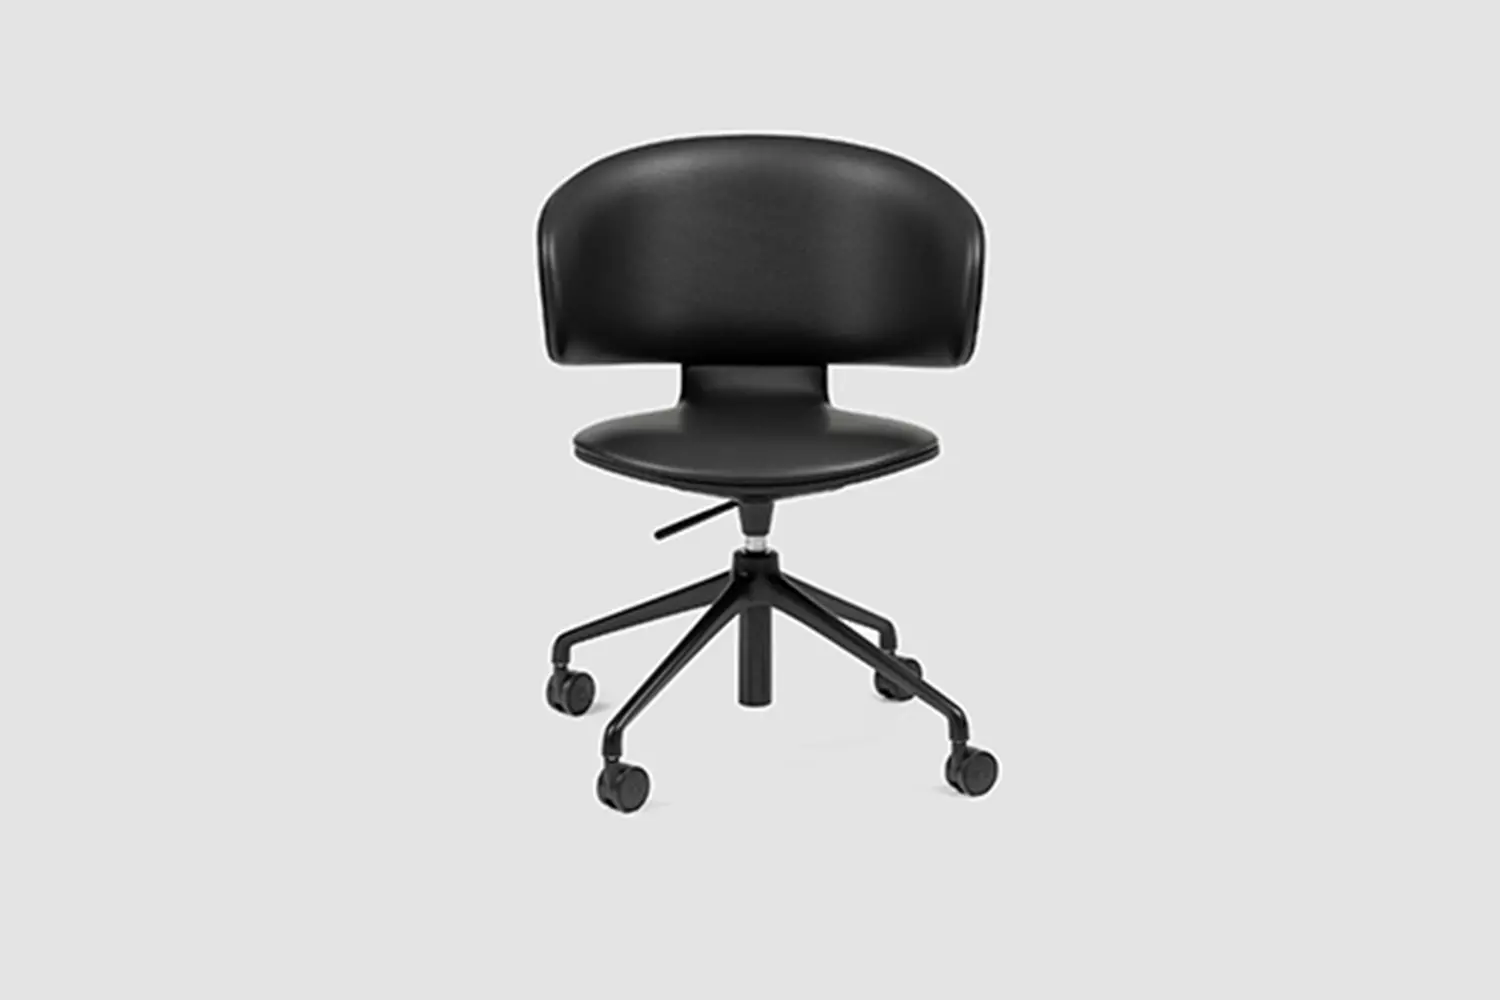 studio-chair-mit-fusskreuz-auf-rollen, with castors Upholstered Non-pholstered swivel base Premium Office swivel chair Chair, Bene Office furniture, Image 1